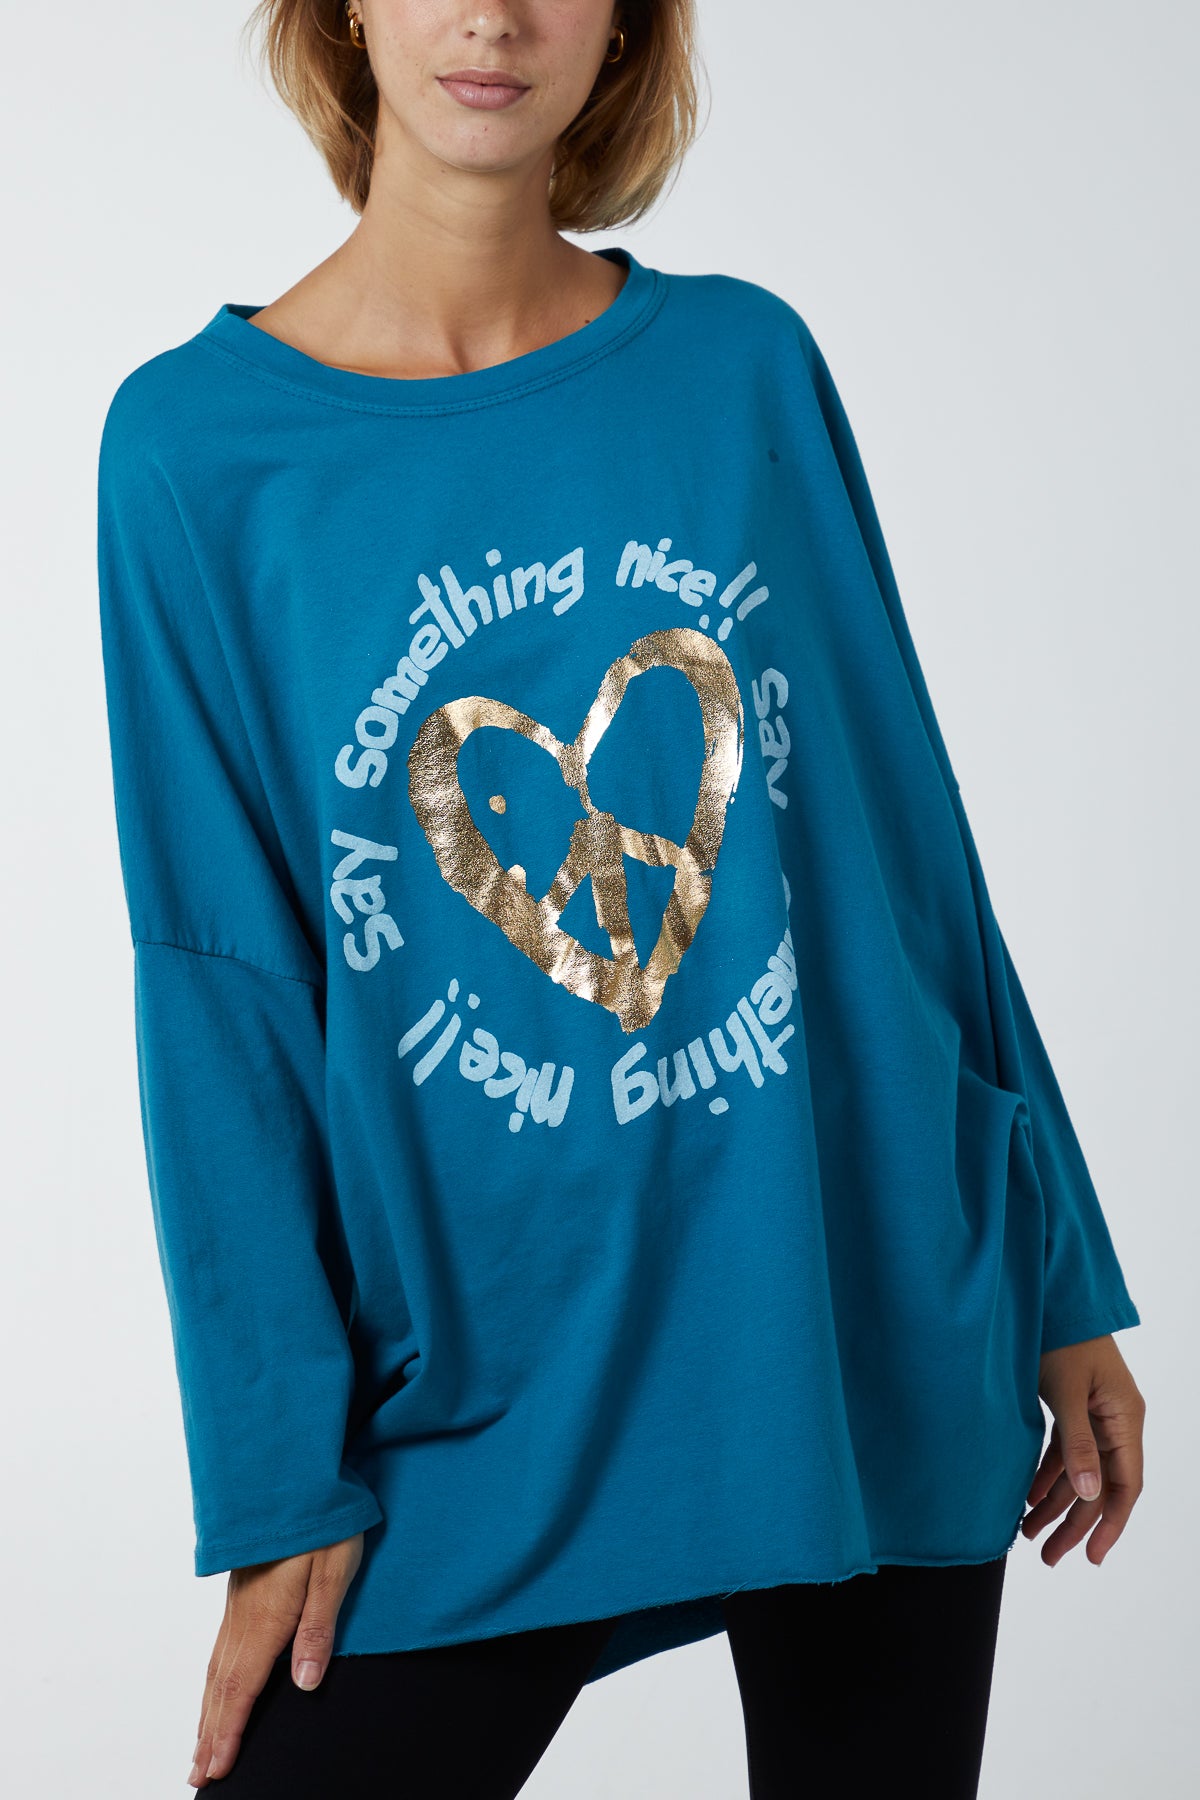 Gold Heart Writing Sweatshirt Top